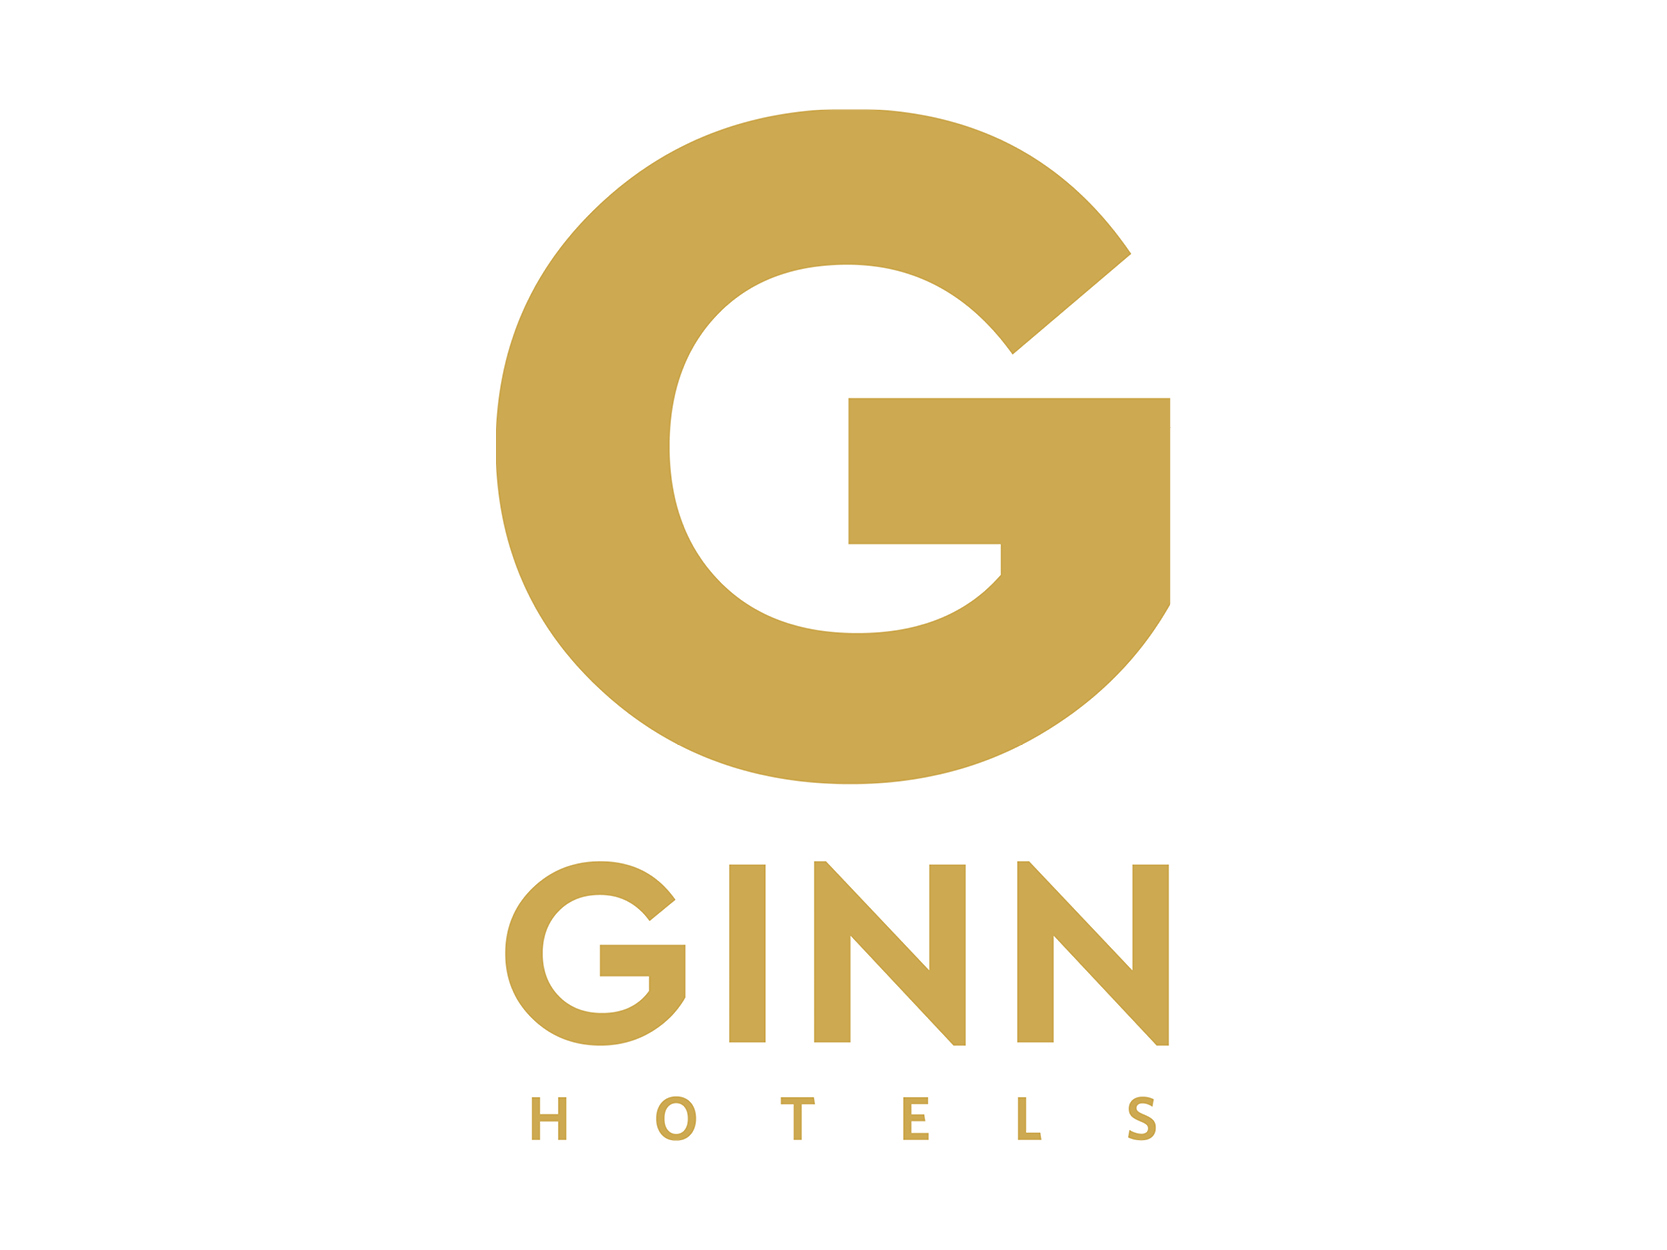 GINN Hotels